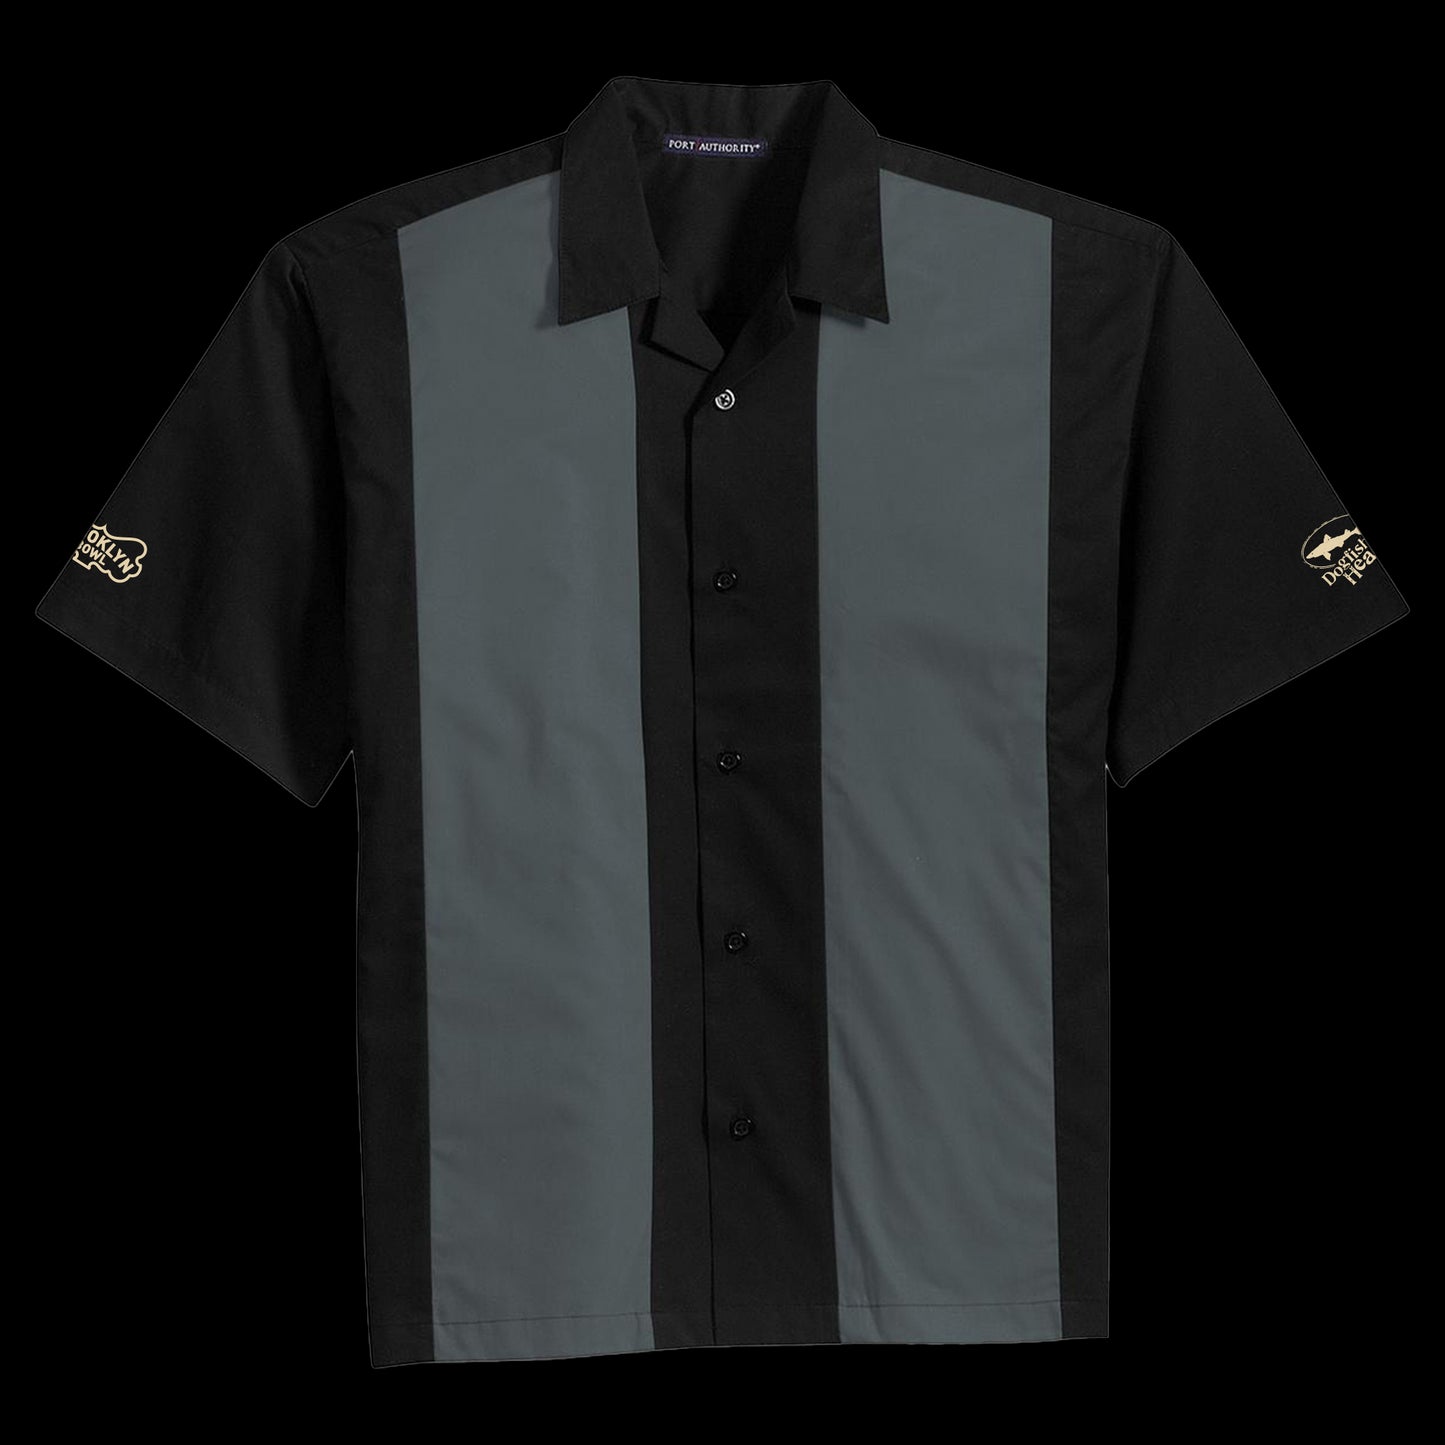 Limited Edition Black/Grey Bowling Shirt